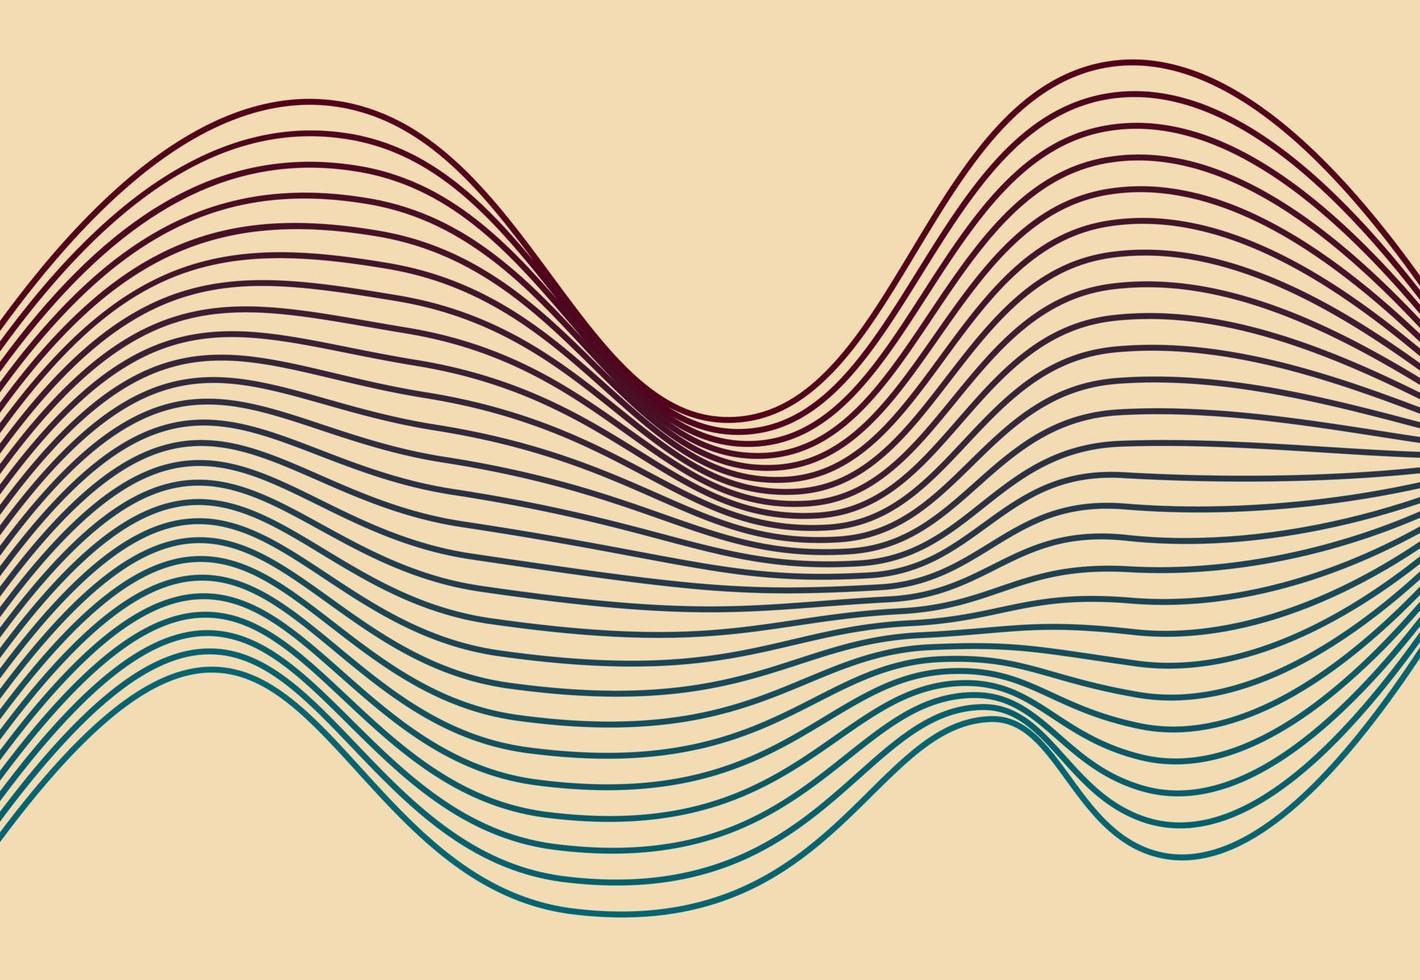 Illusory wavy background vector